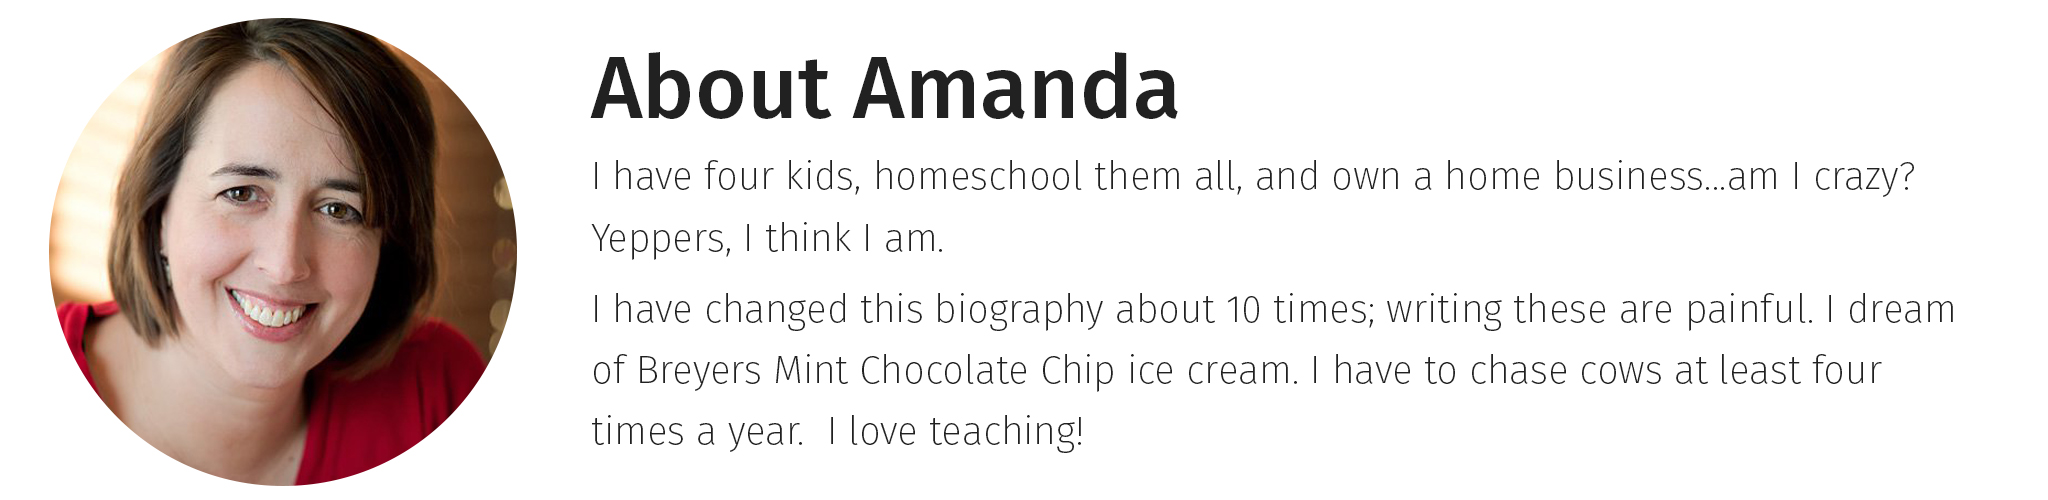 About Amanda